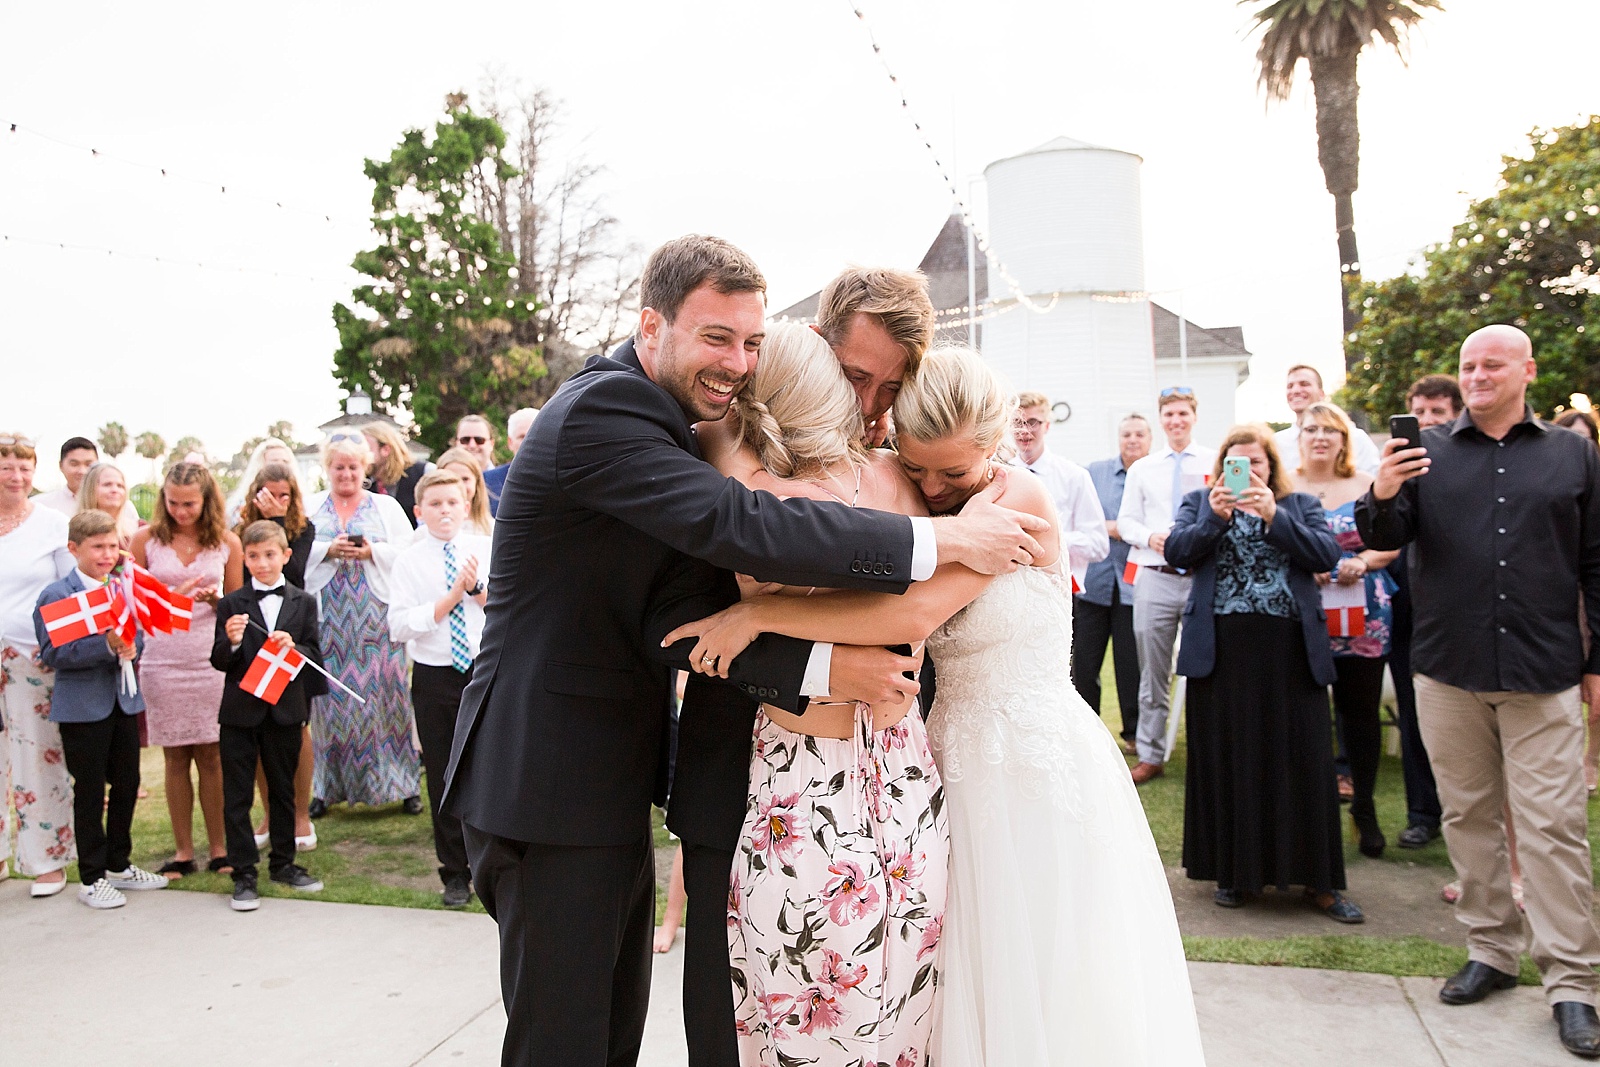 Huntington Beach wedding day photographed by Randi Michelle Photography